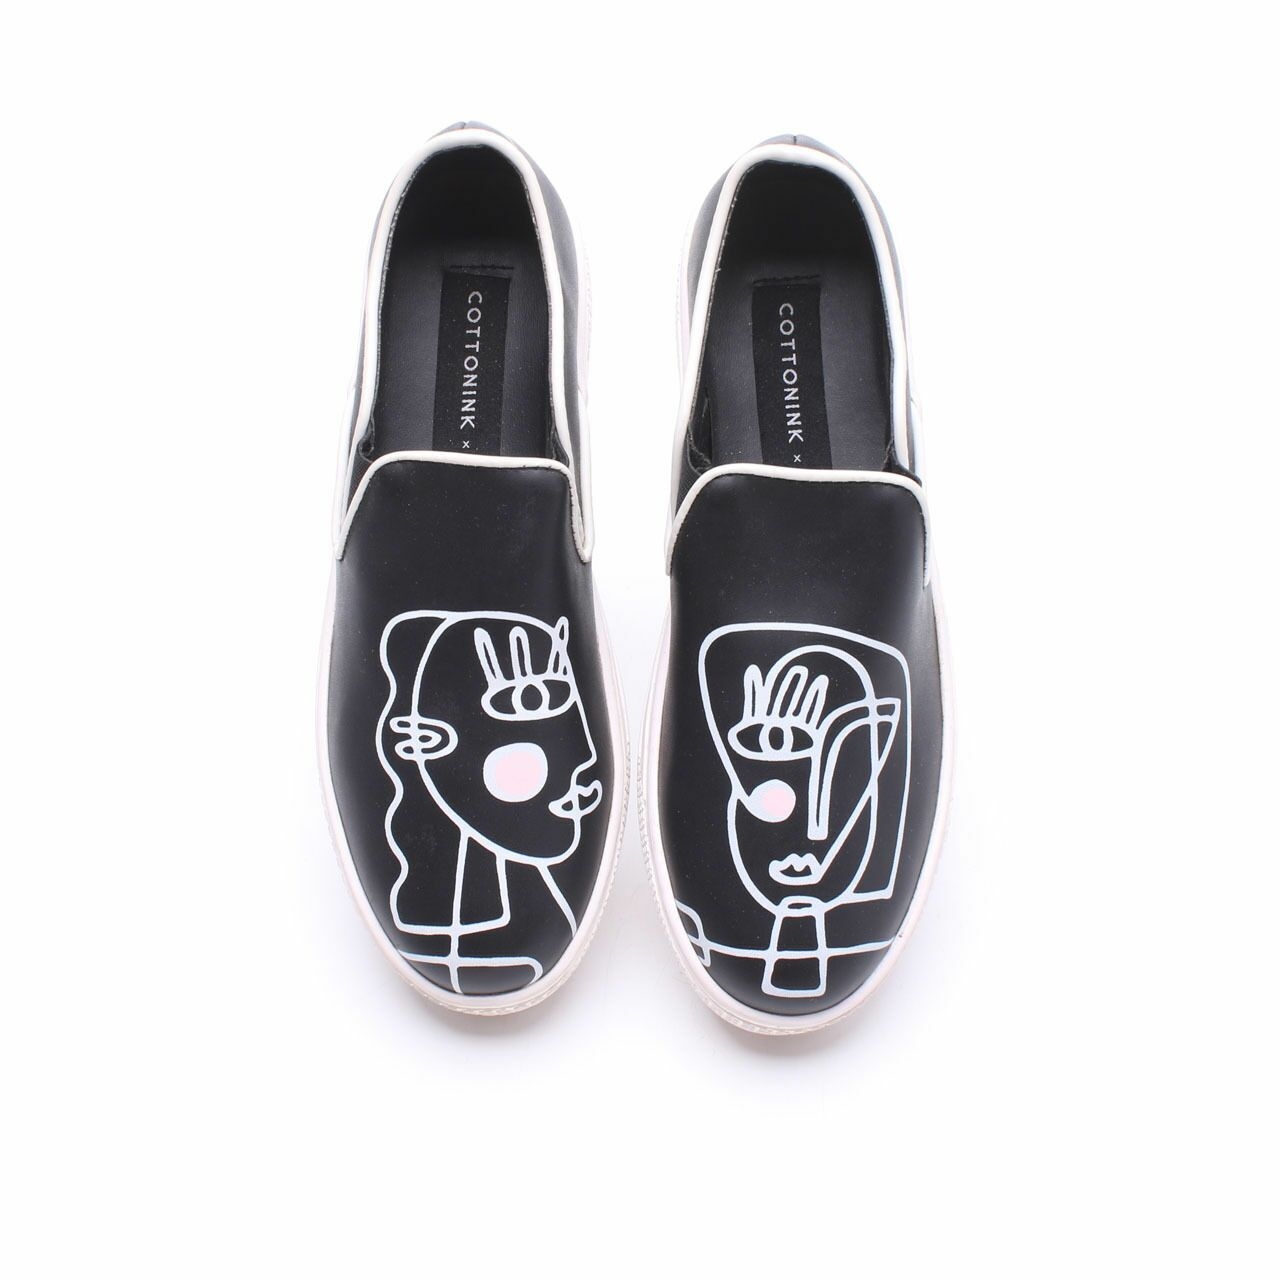 Cotton Ink Black & White Sneakers Slip On